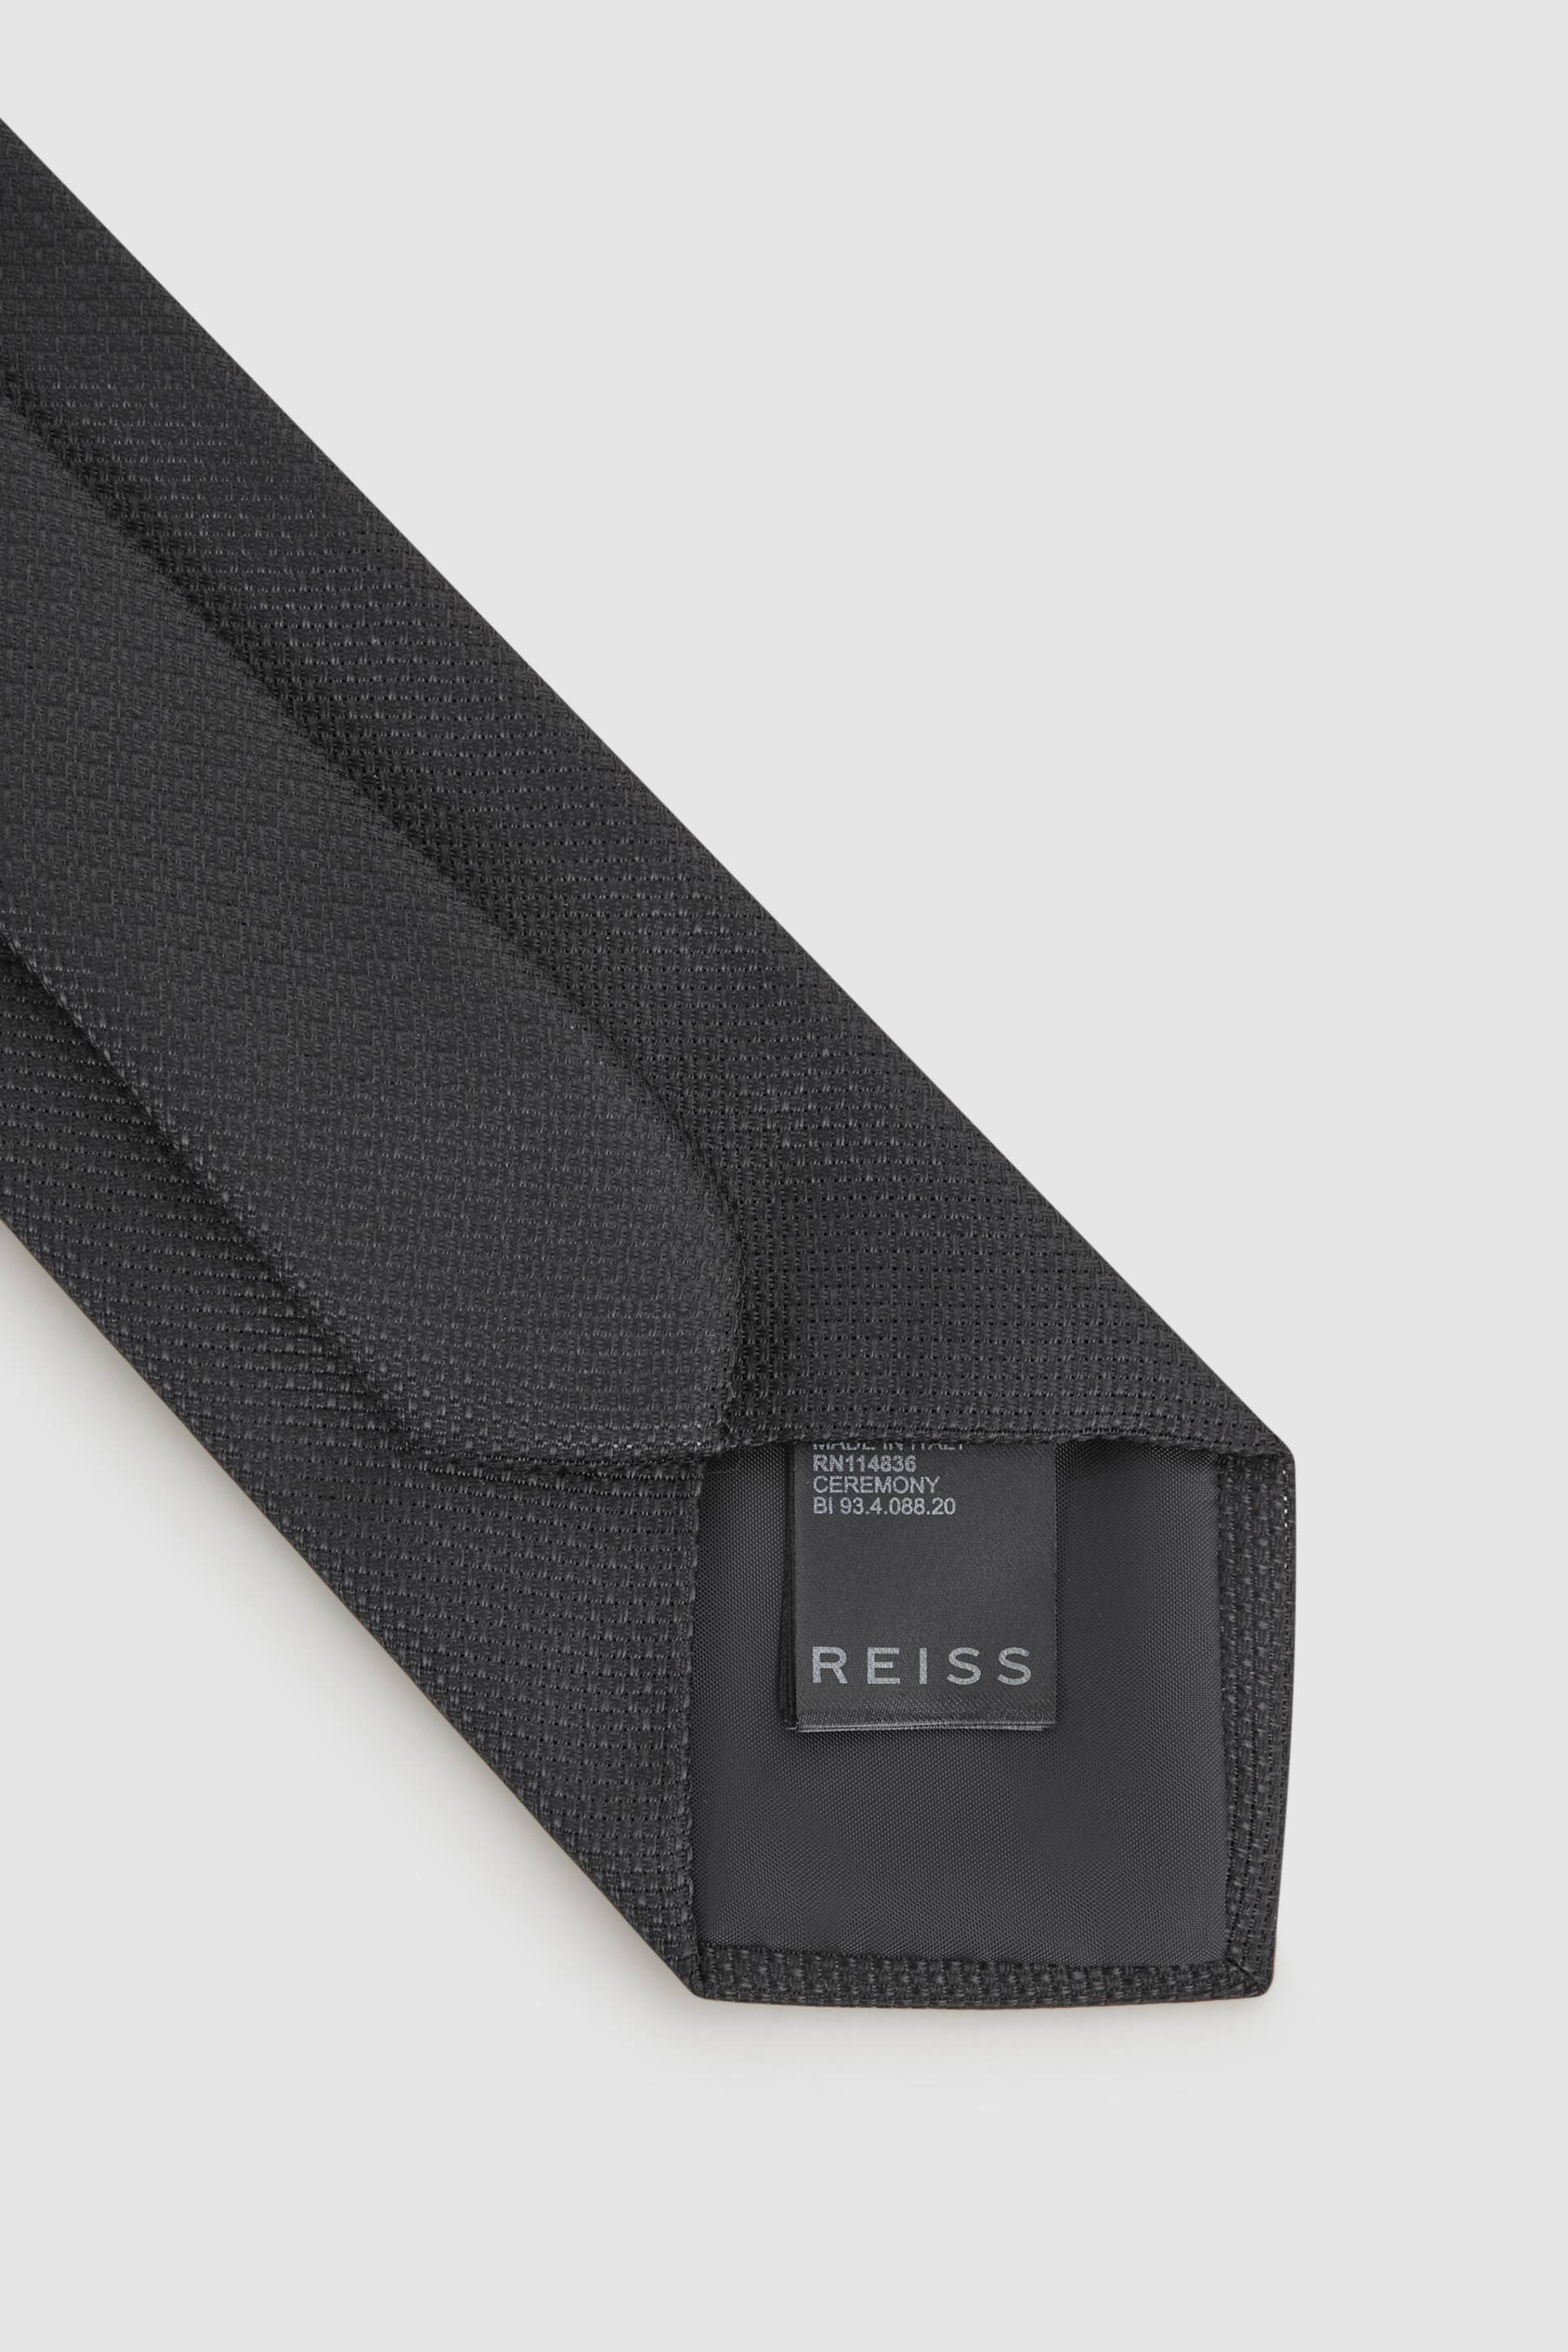 Reiss Black Ceremony Textured Silk Blend Tie - Image 4 of 5